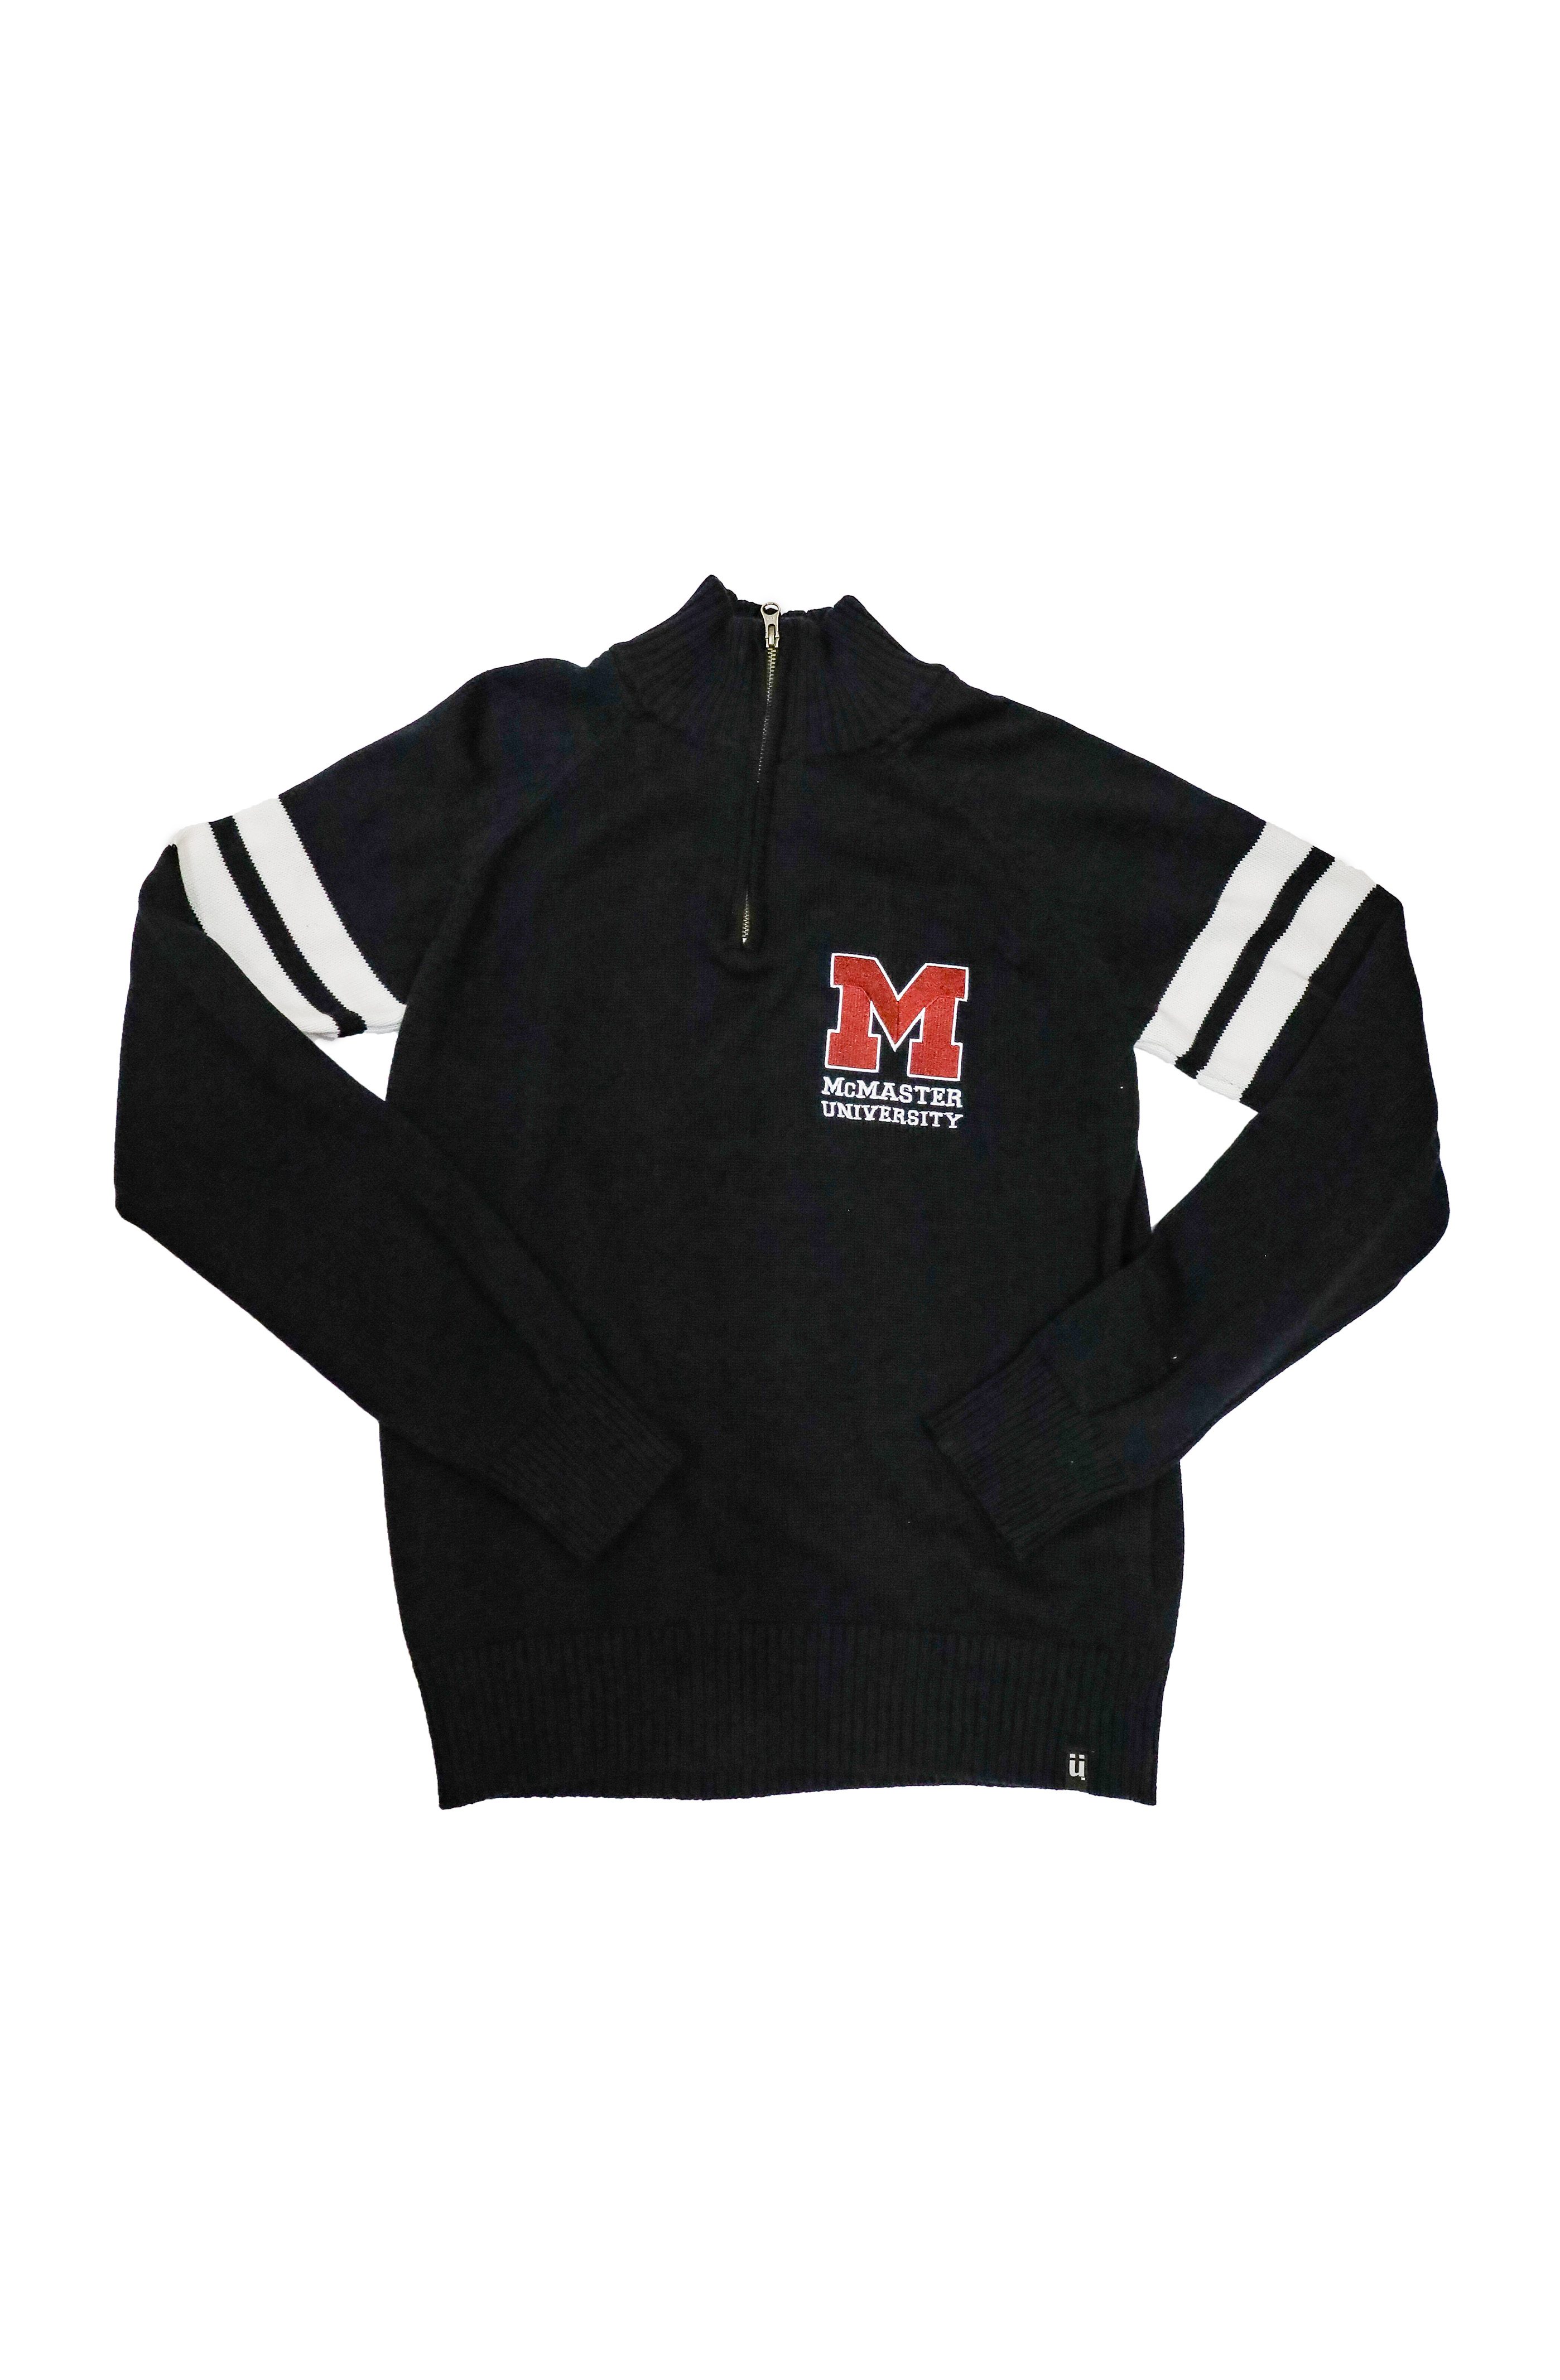 McMaster Knit 1/4 zip sweater - #7926445